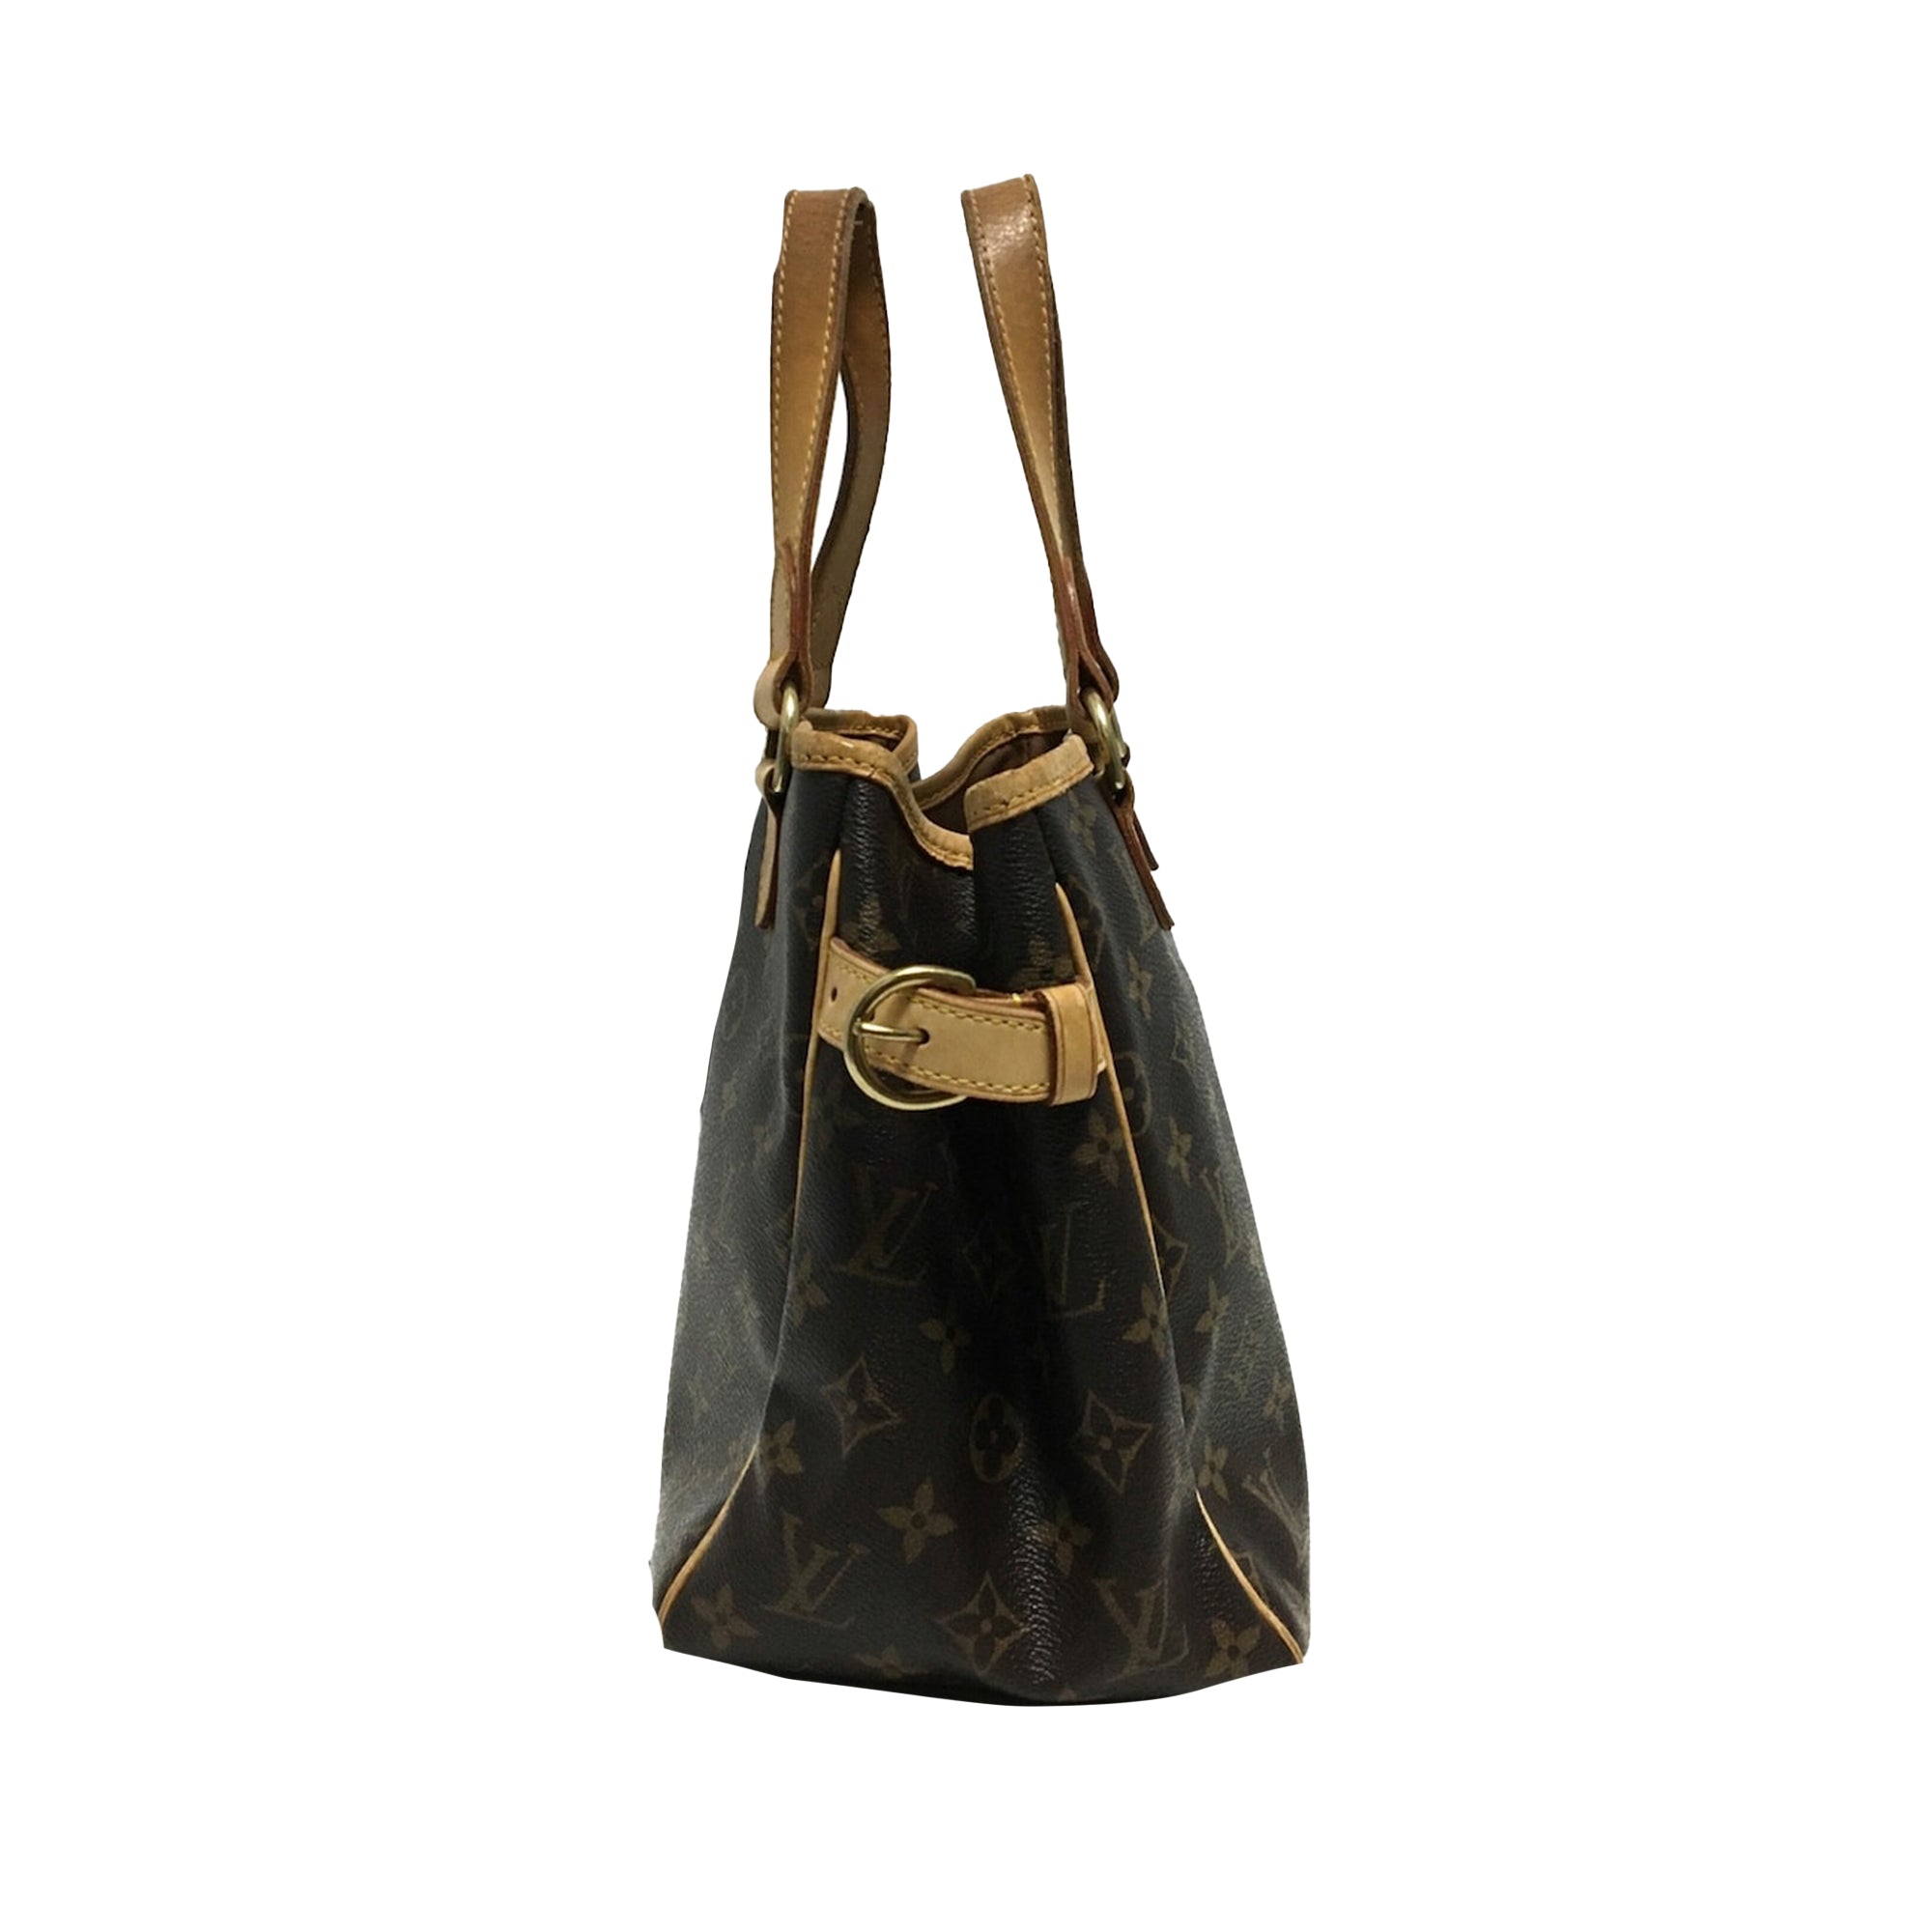 Monogram Batignolles Vertical PM  Women handbags, Vuitton, Louis vuitton